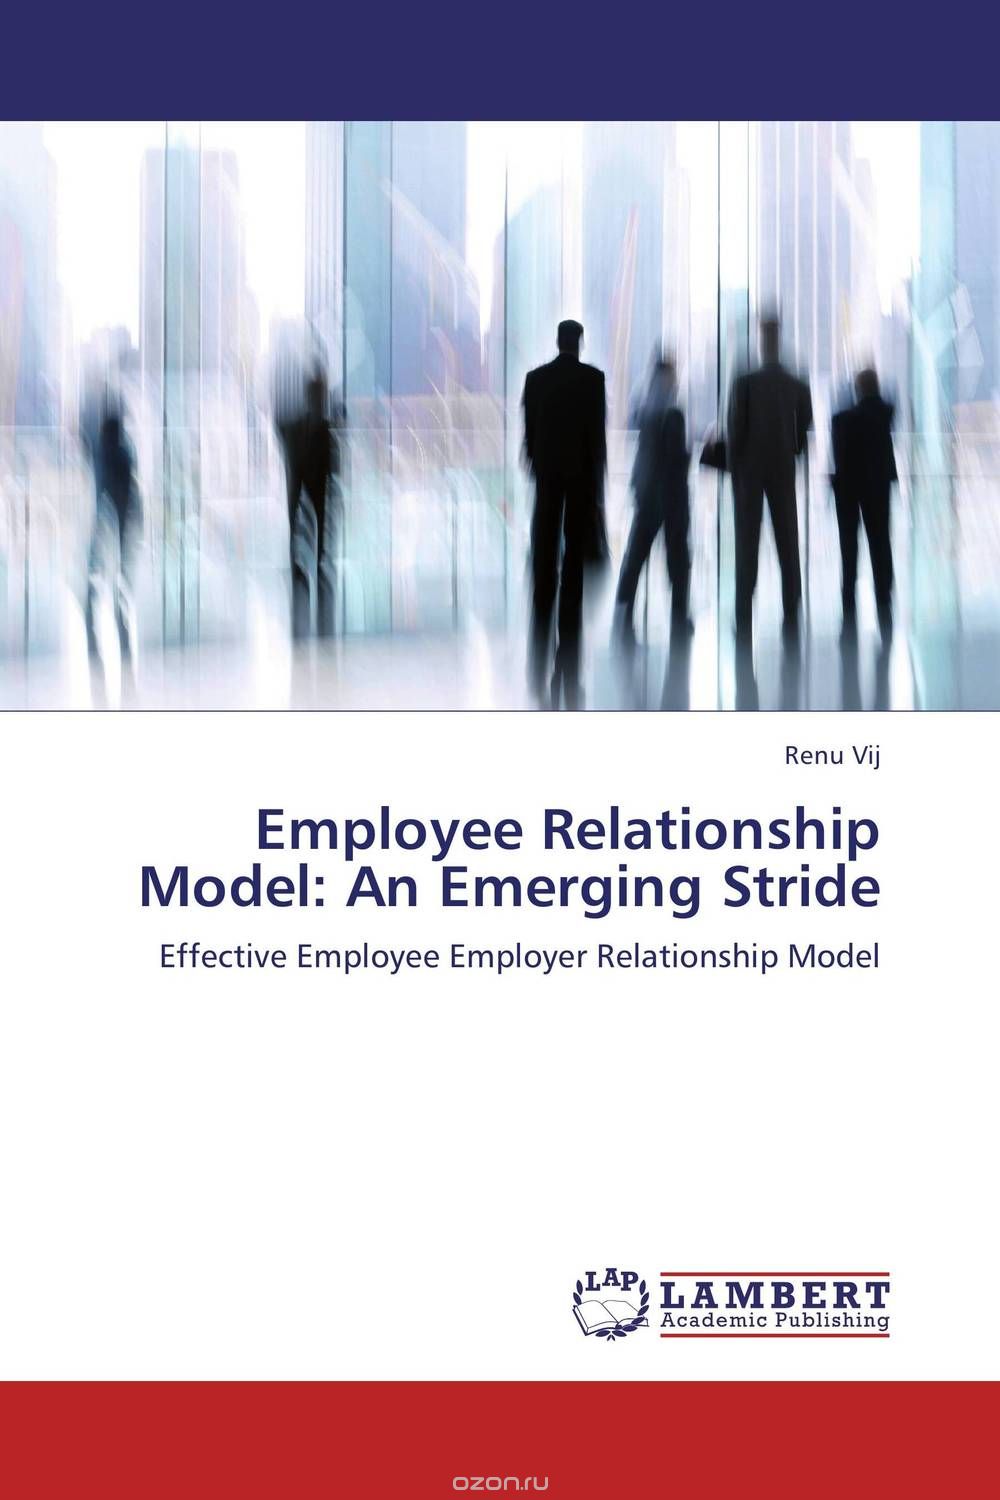 Employee Relationship Model: An Emerging Stride